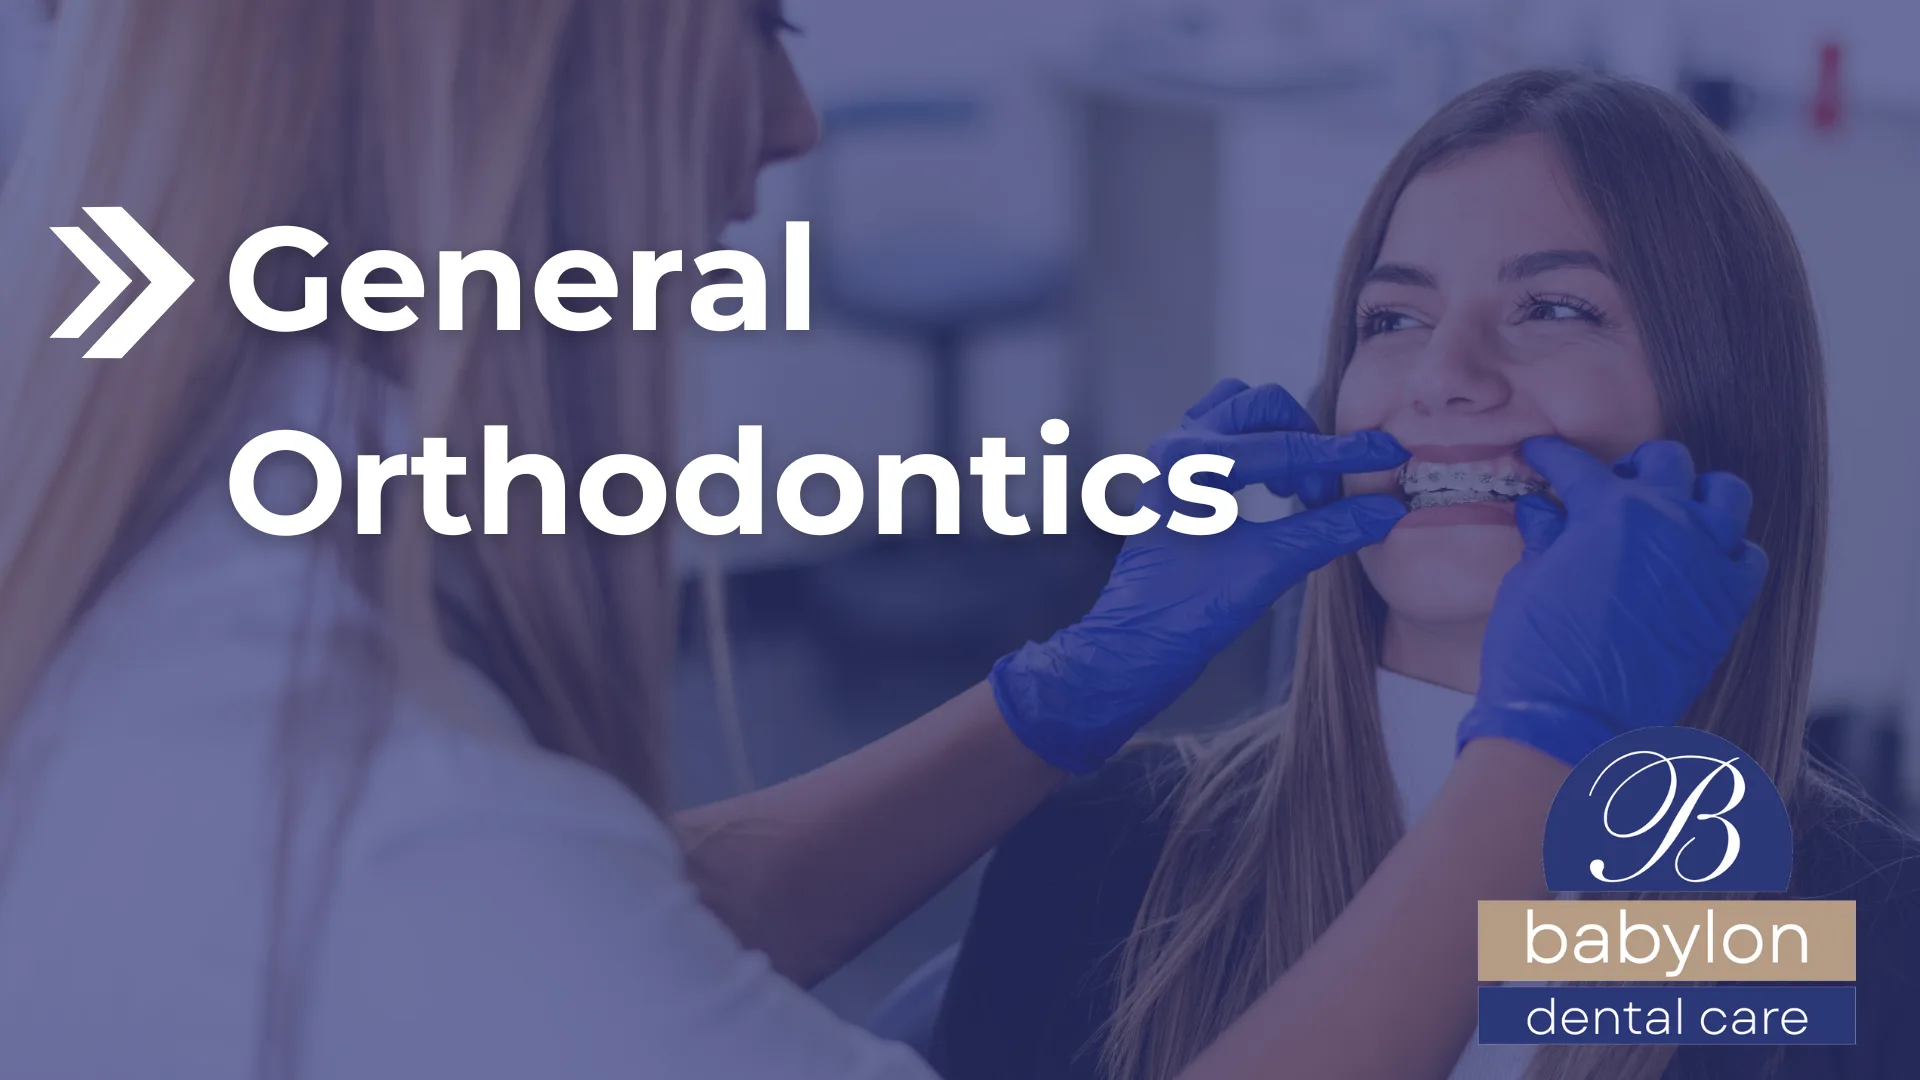 General Orthodontics image - new logo